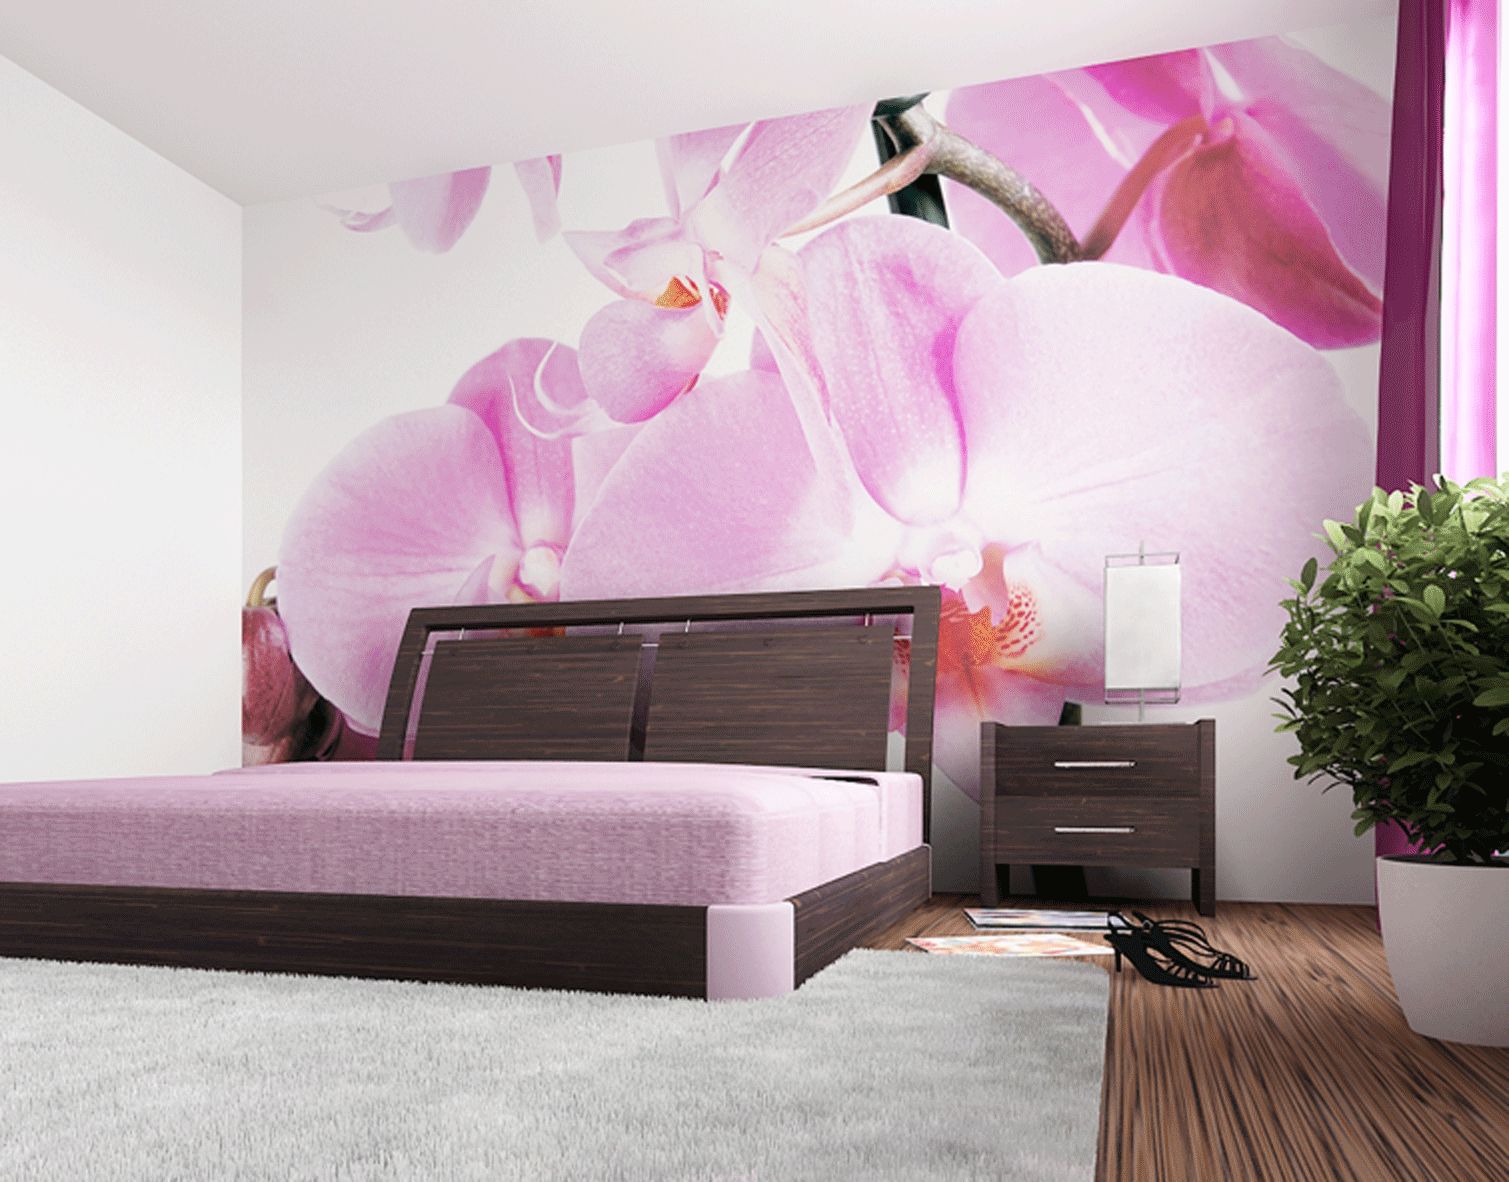 Sienų freska su didelėmis gėlėmis miegamojo interjere